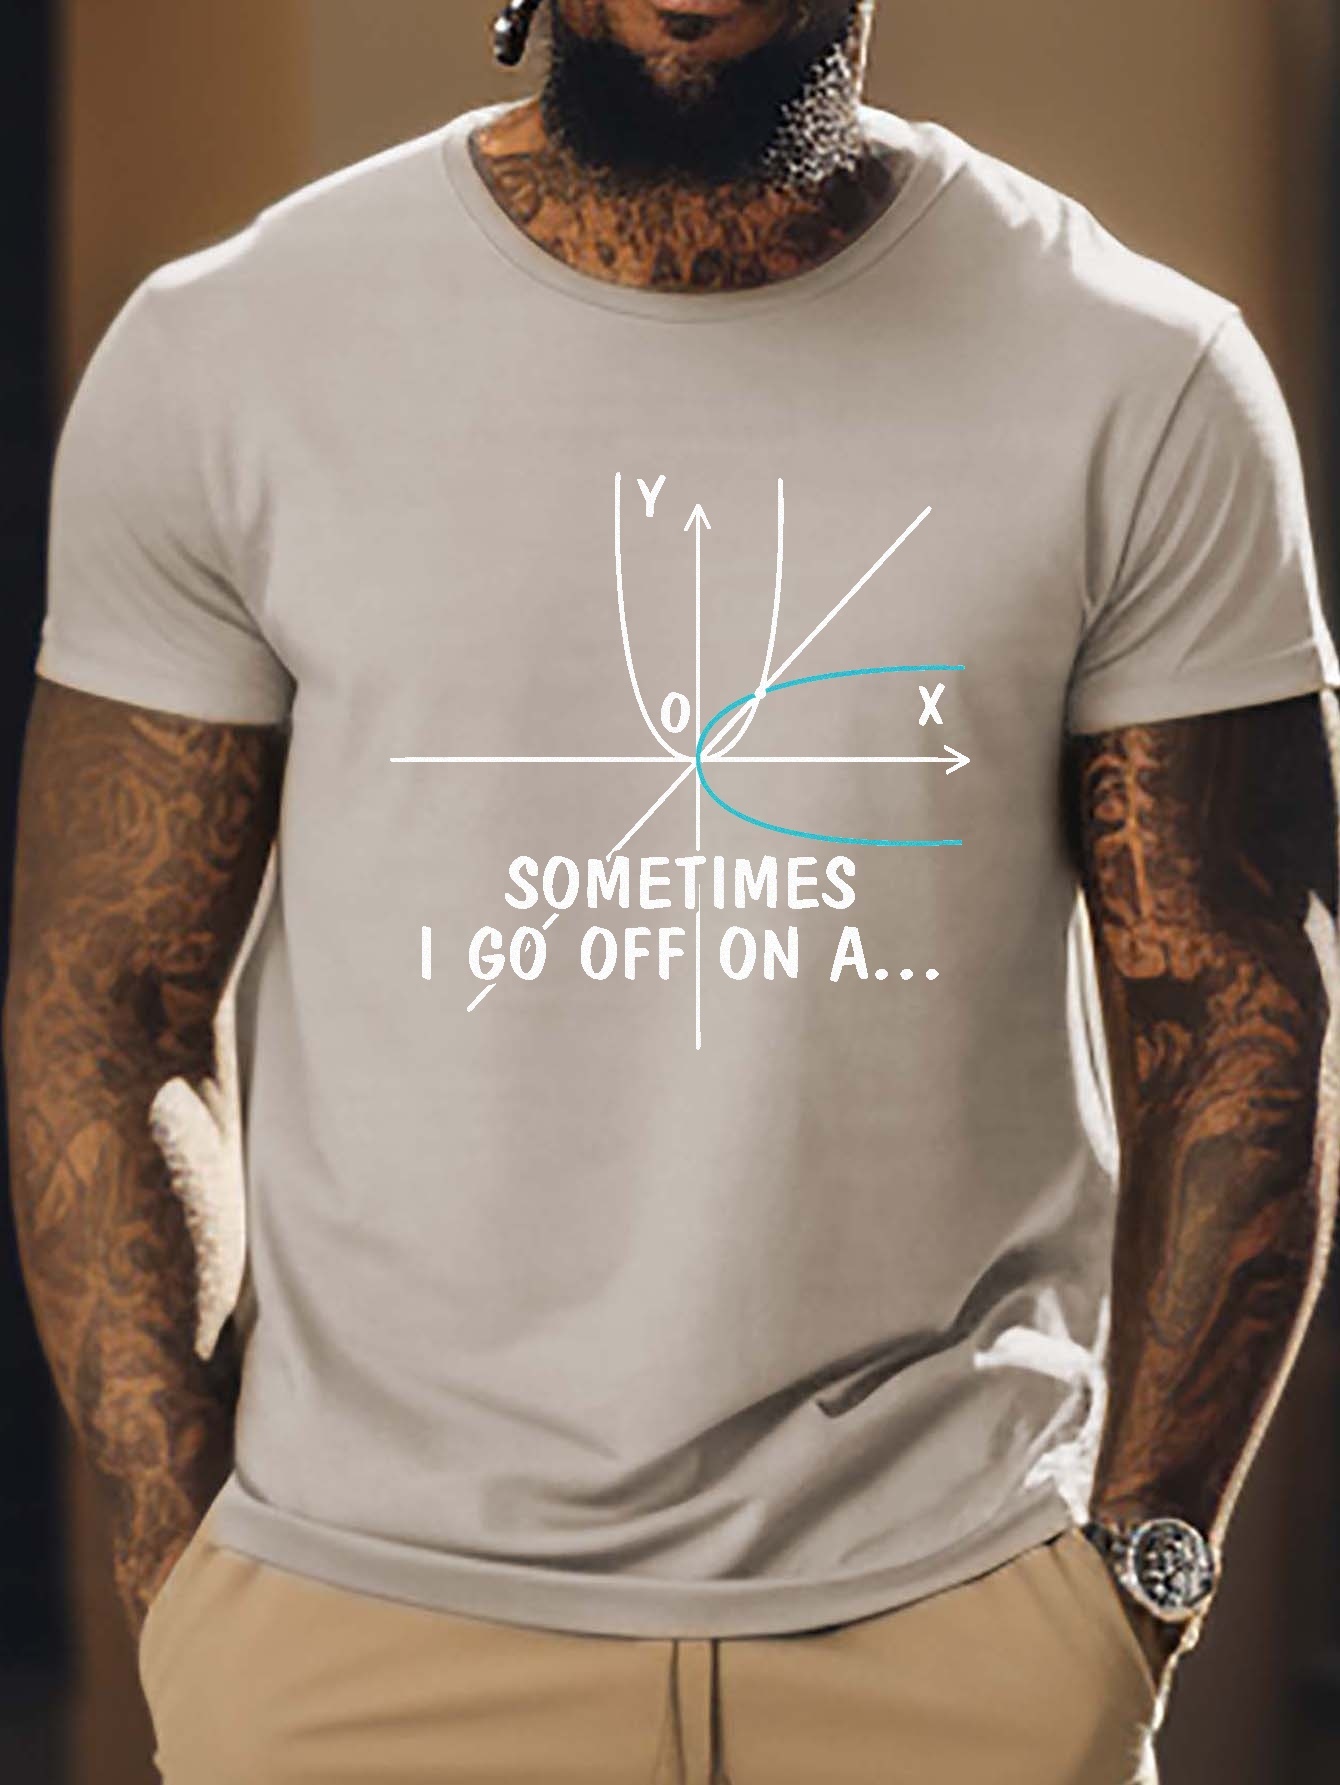 Medusa Pattern Print Men's Comfy Sports T-shirt, Graphic Tee Men's